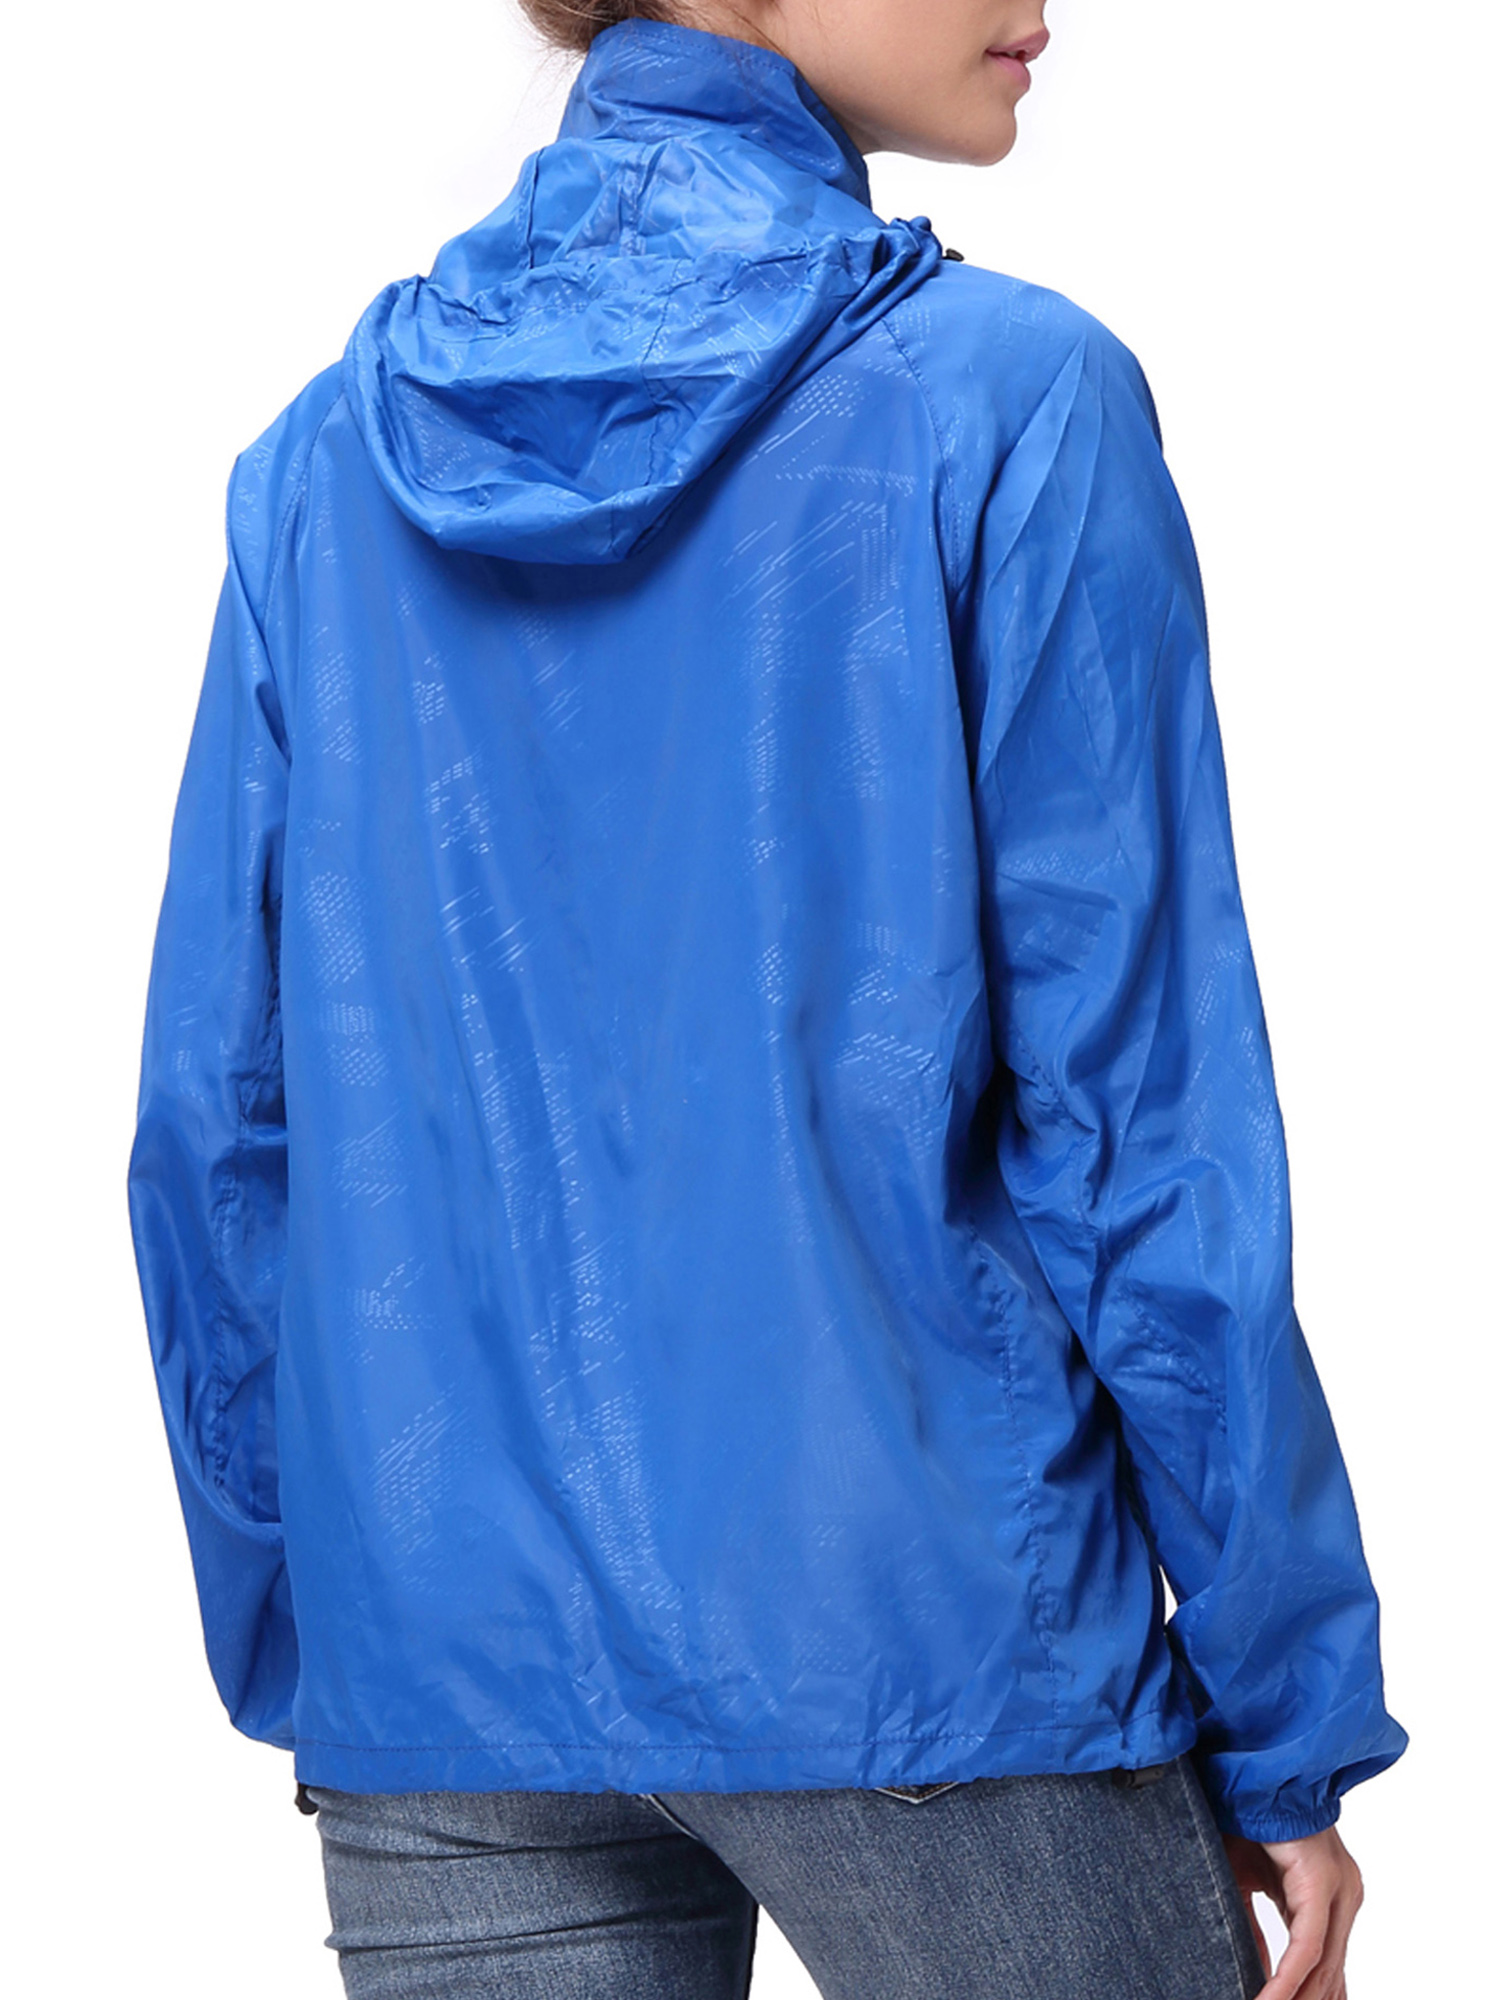 LELINTA Women Hoodie Jacket Lightweight Packable Rain Jacket Windbreaker Zipper Hooded Coats Slim Jacket Spring Long Sleeve Running Sport - image 3 of 9